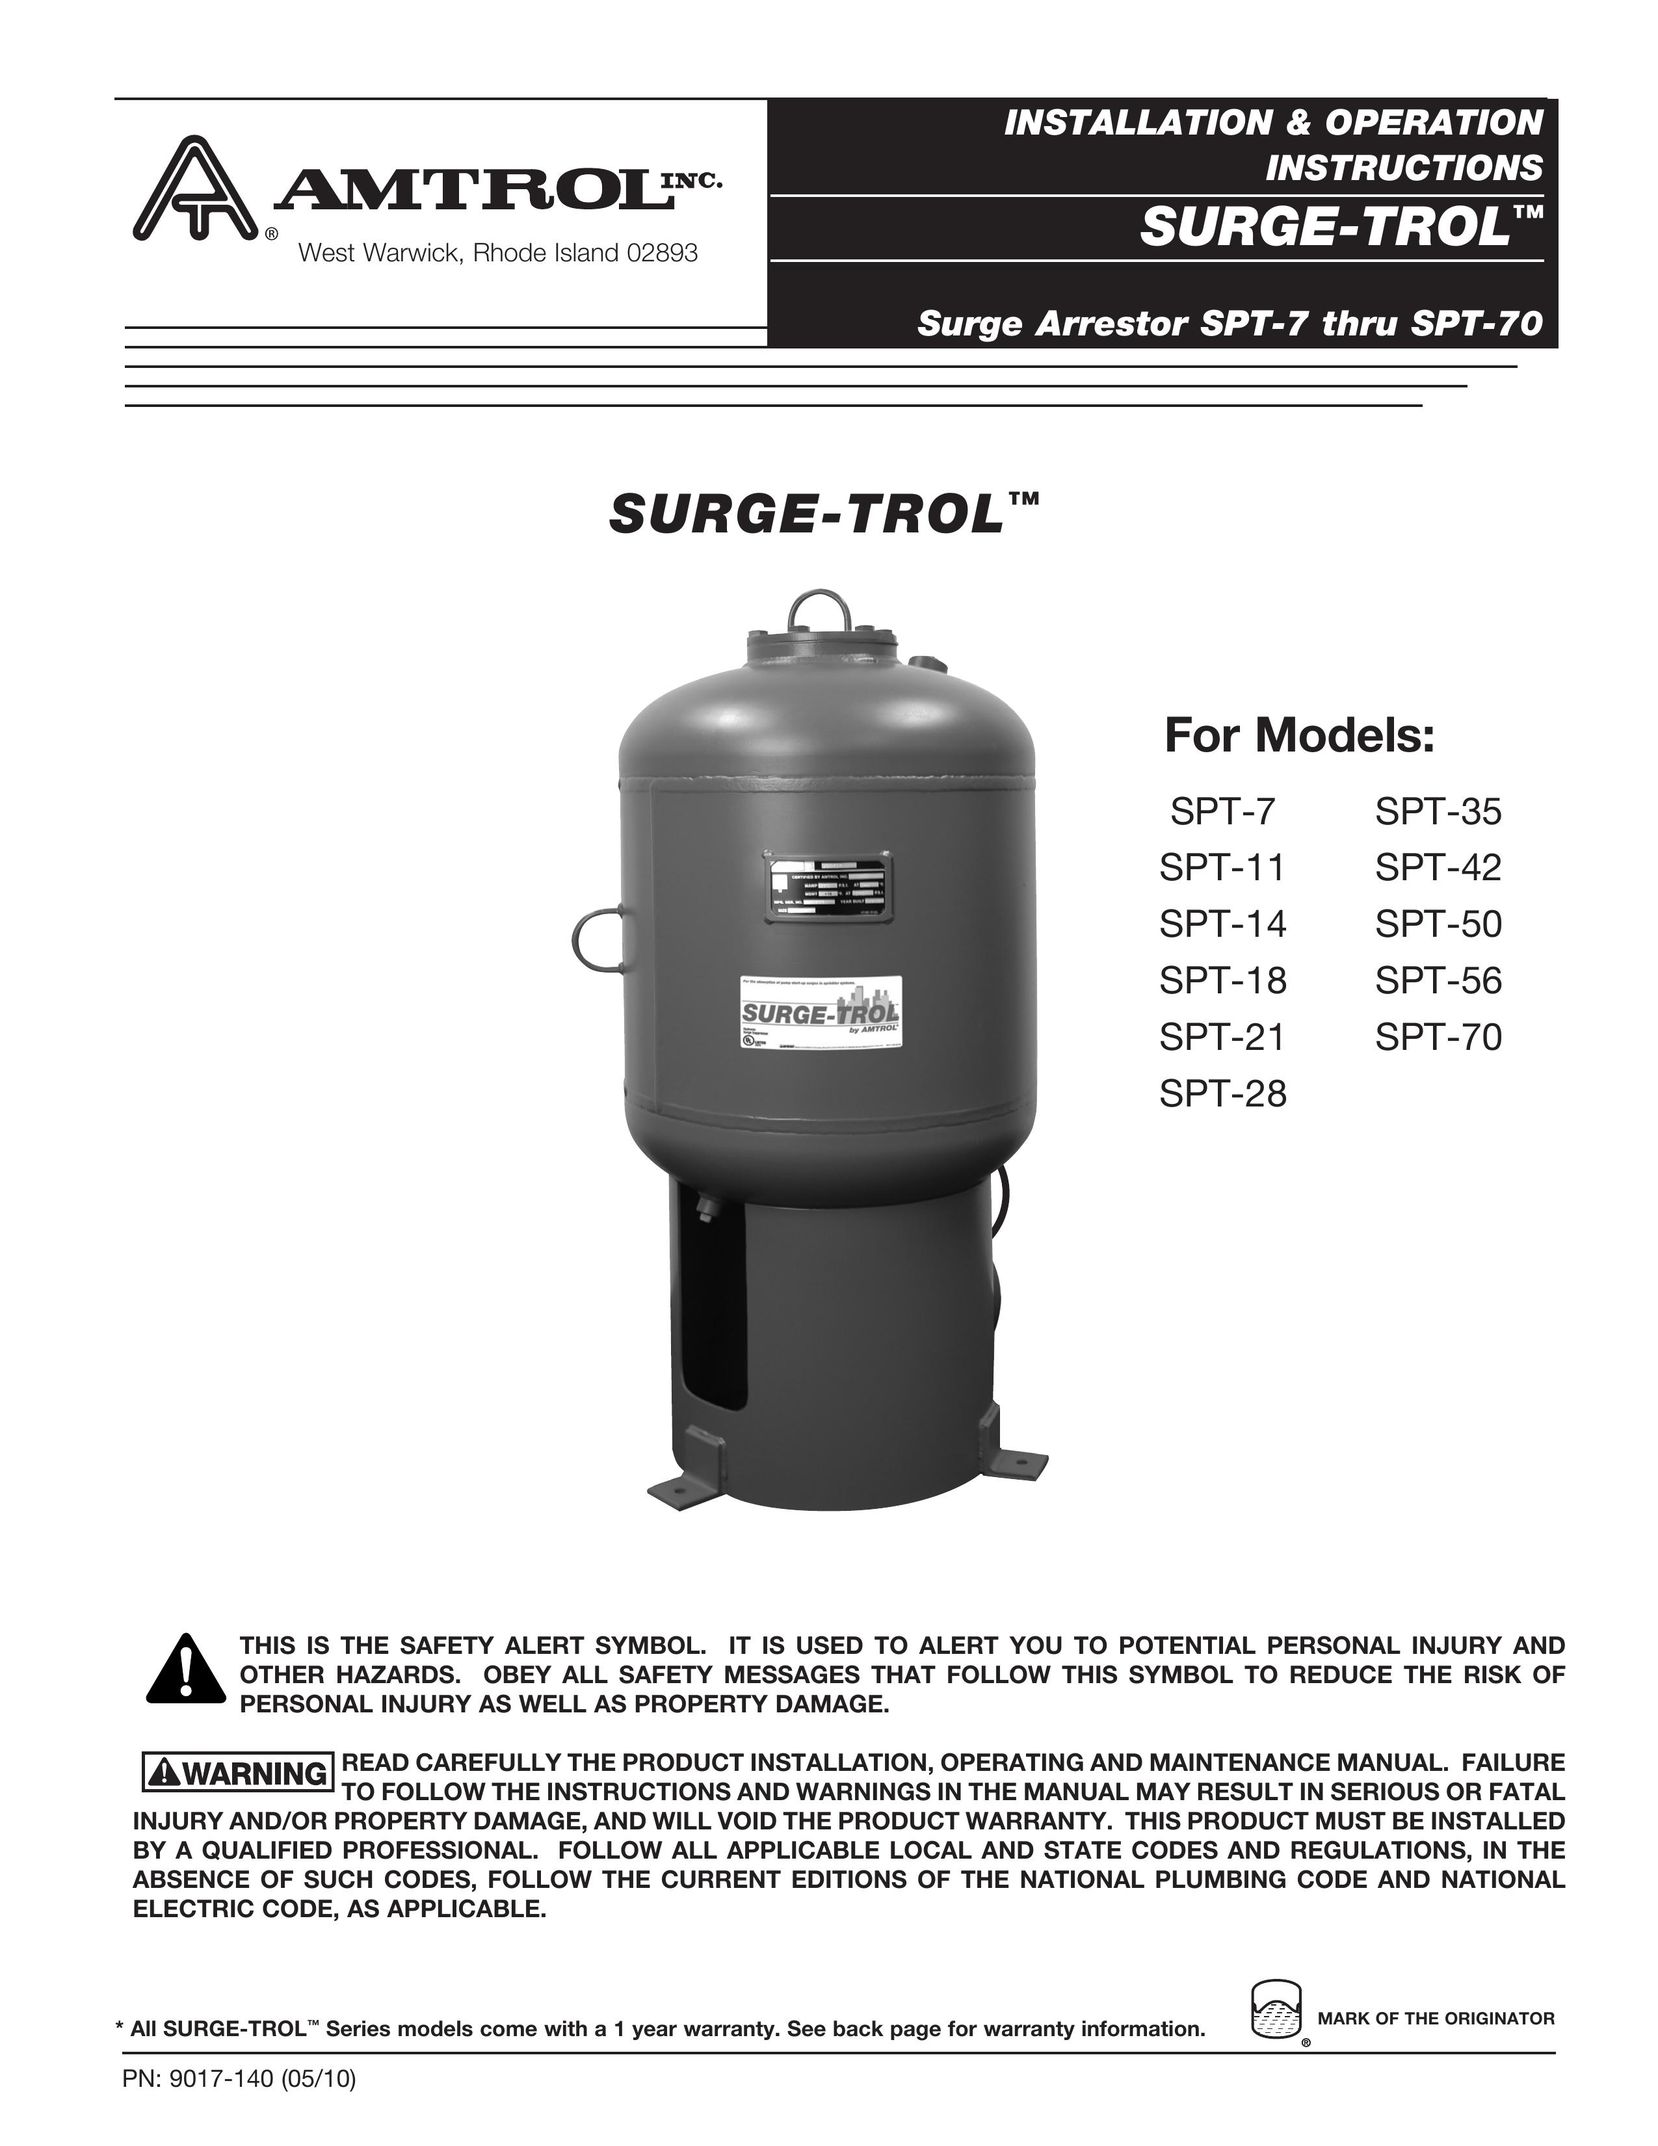 Amtrol SPT-35 Surge Protector User Manual